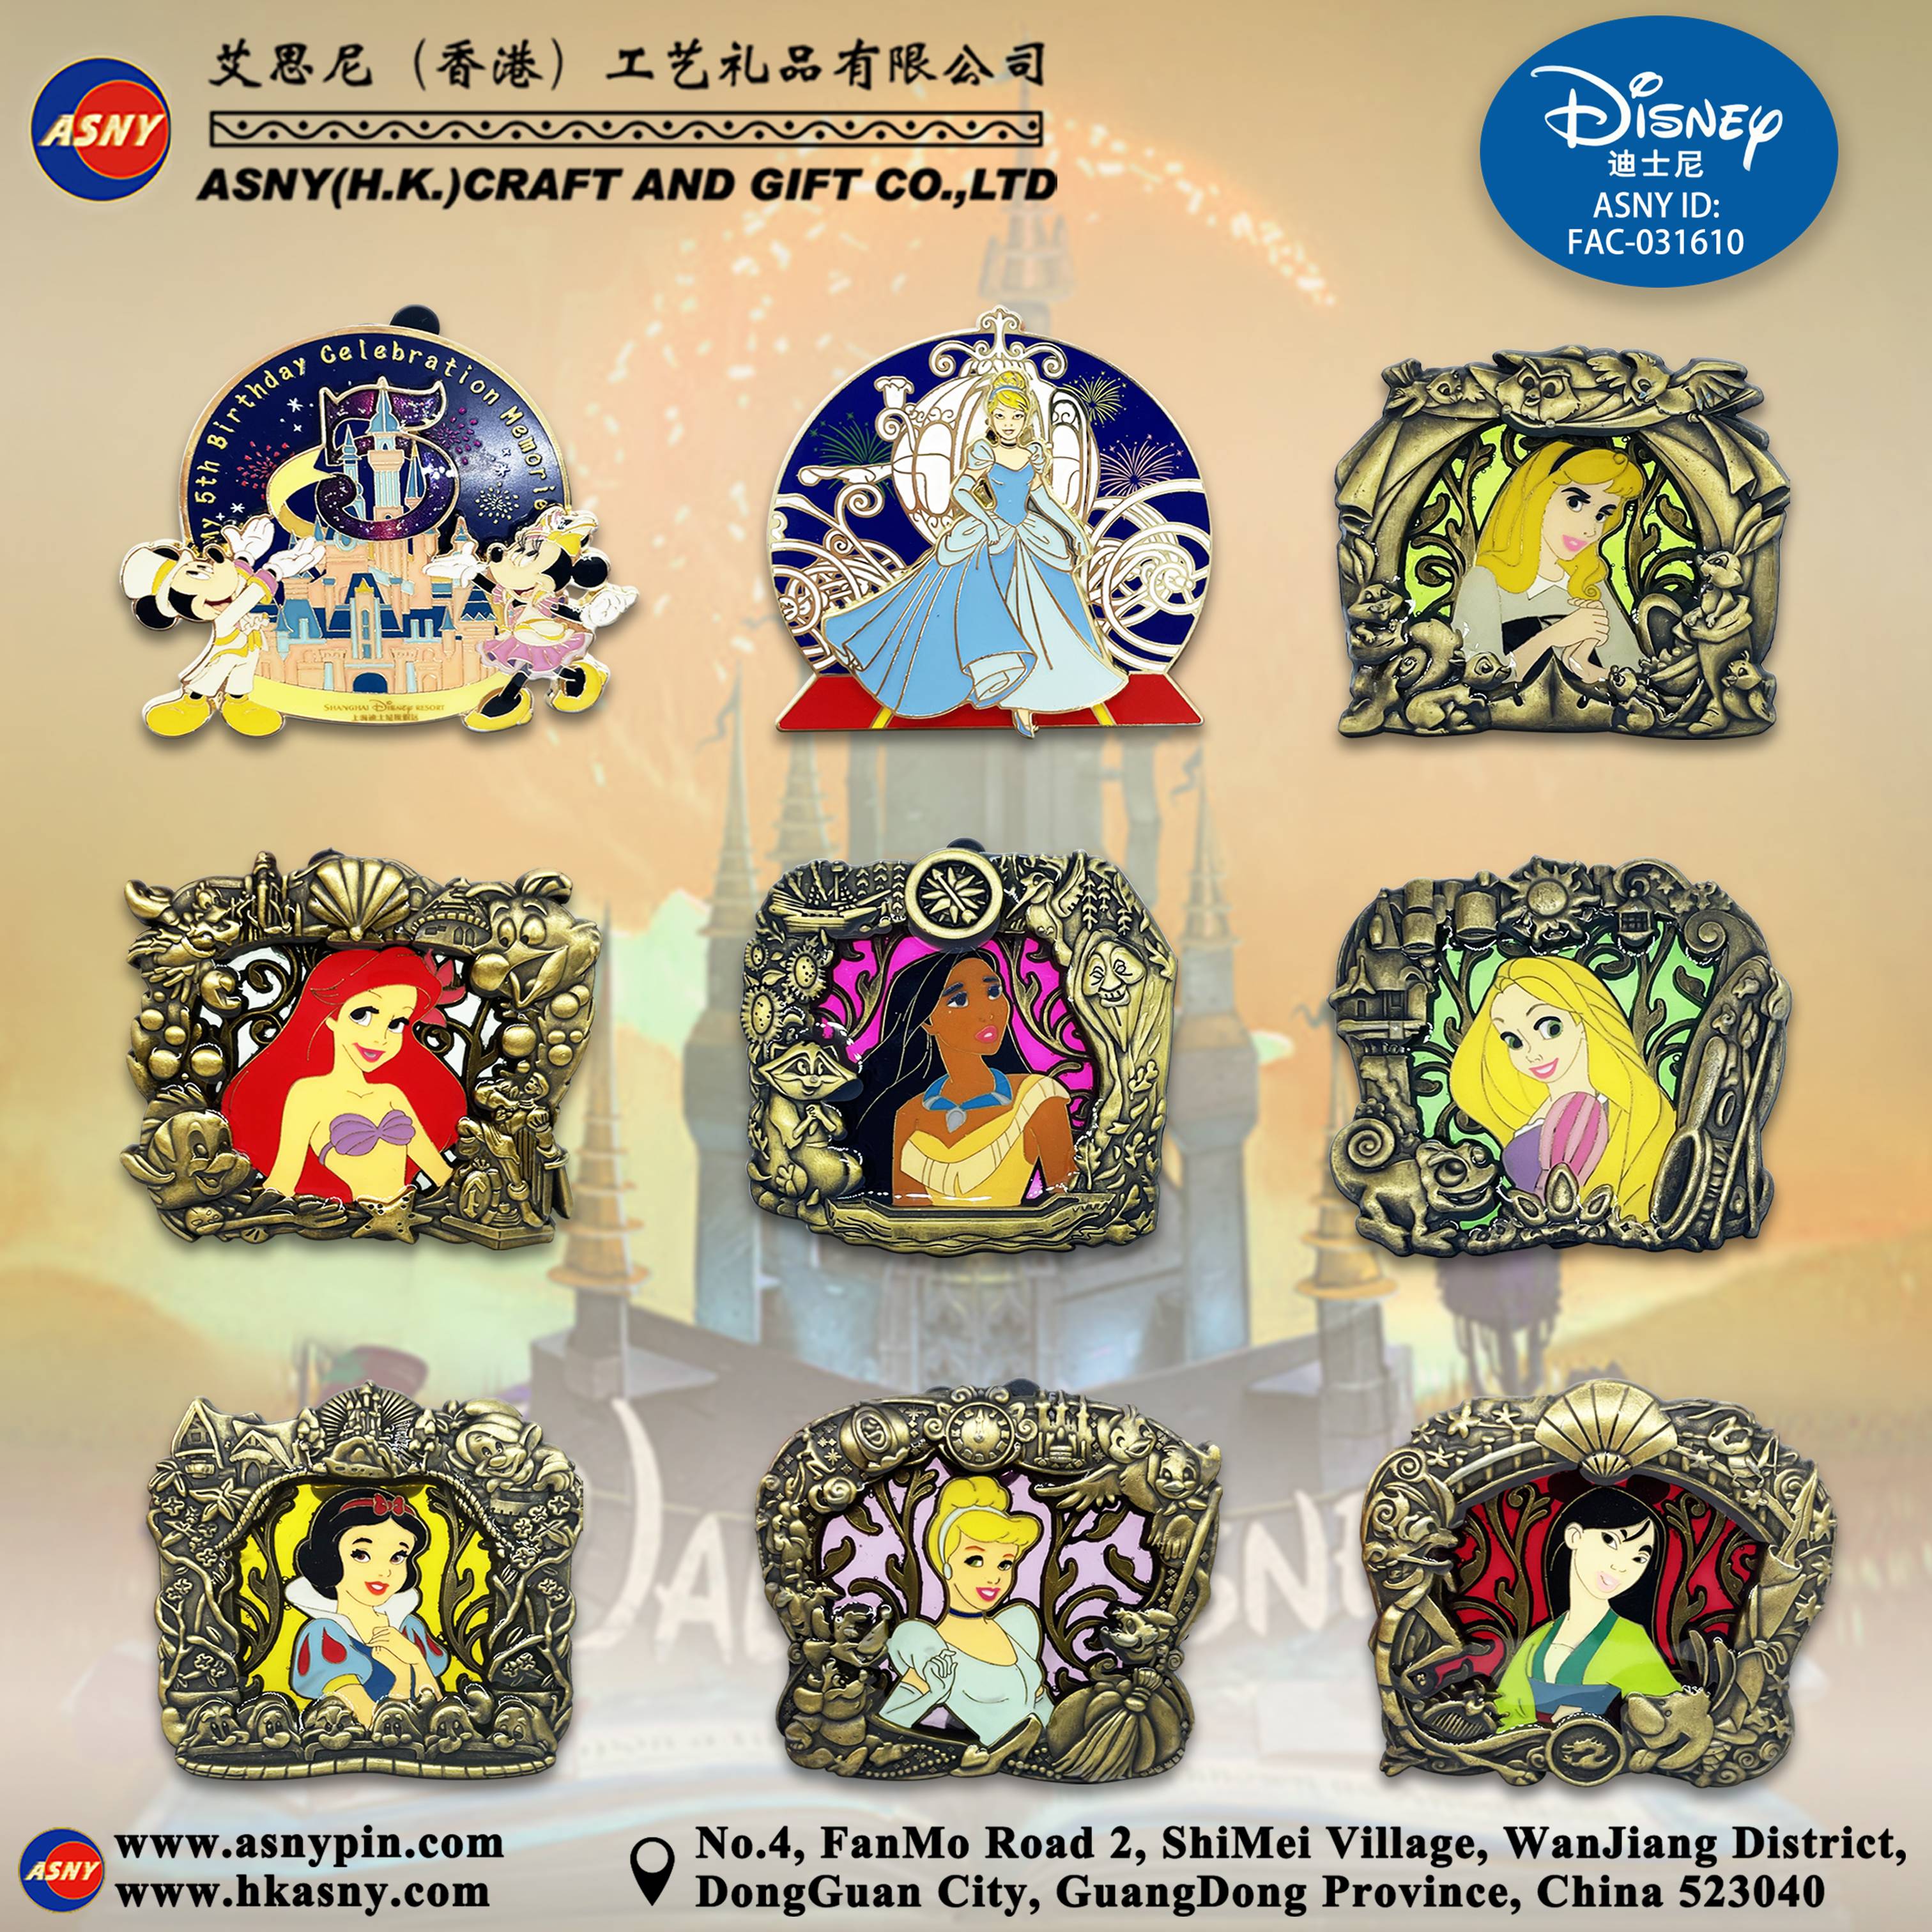 Catalog - Disney Badge & Pin - Souvenir/Craft/Promotional Item Price/Design/Customize/Production/Maker/Supply/Factory (2)